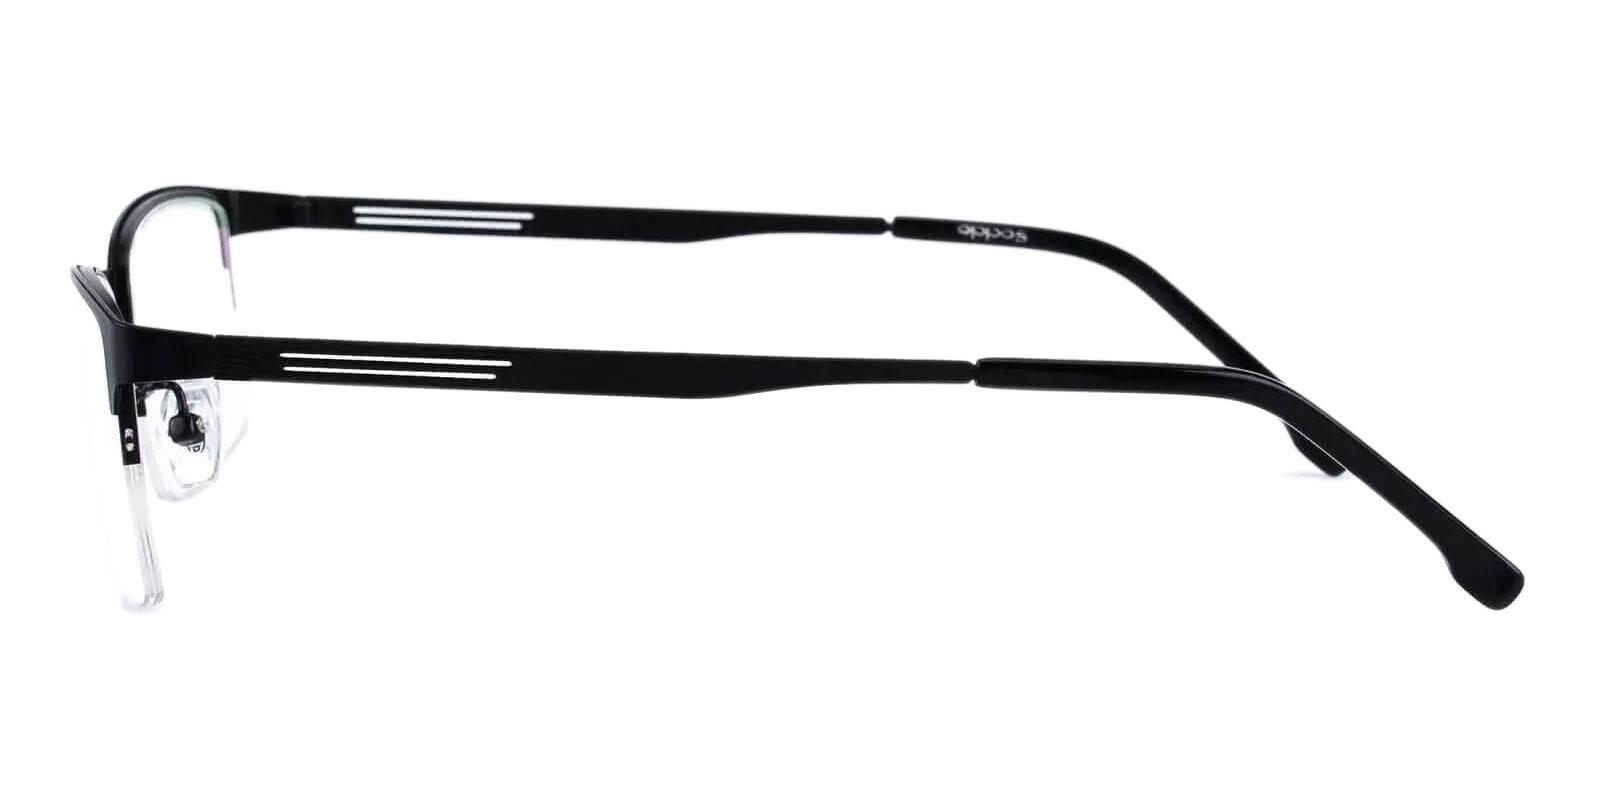 Gabriel Black Metal Eyeglasses , NosePads Frames from ABBE Glasses